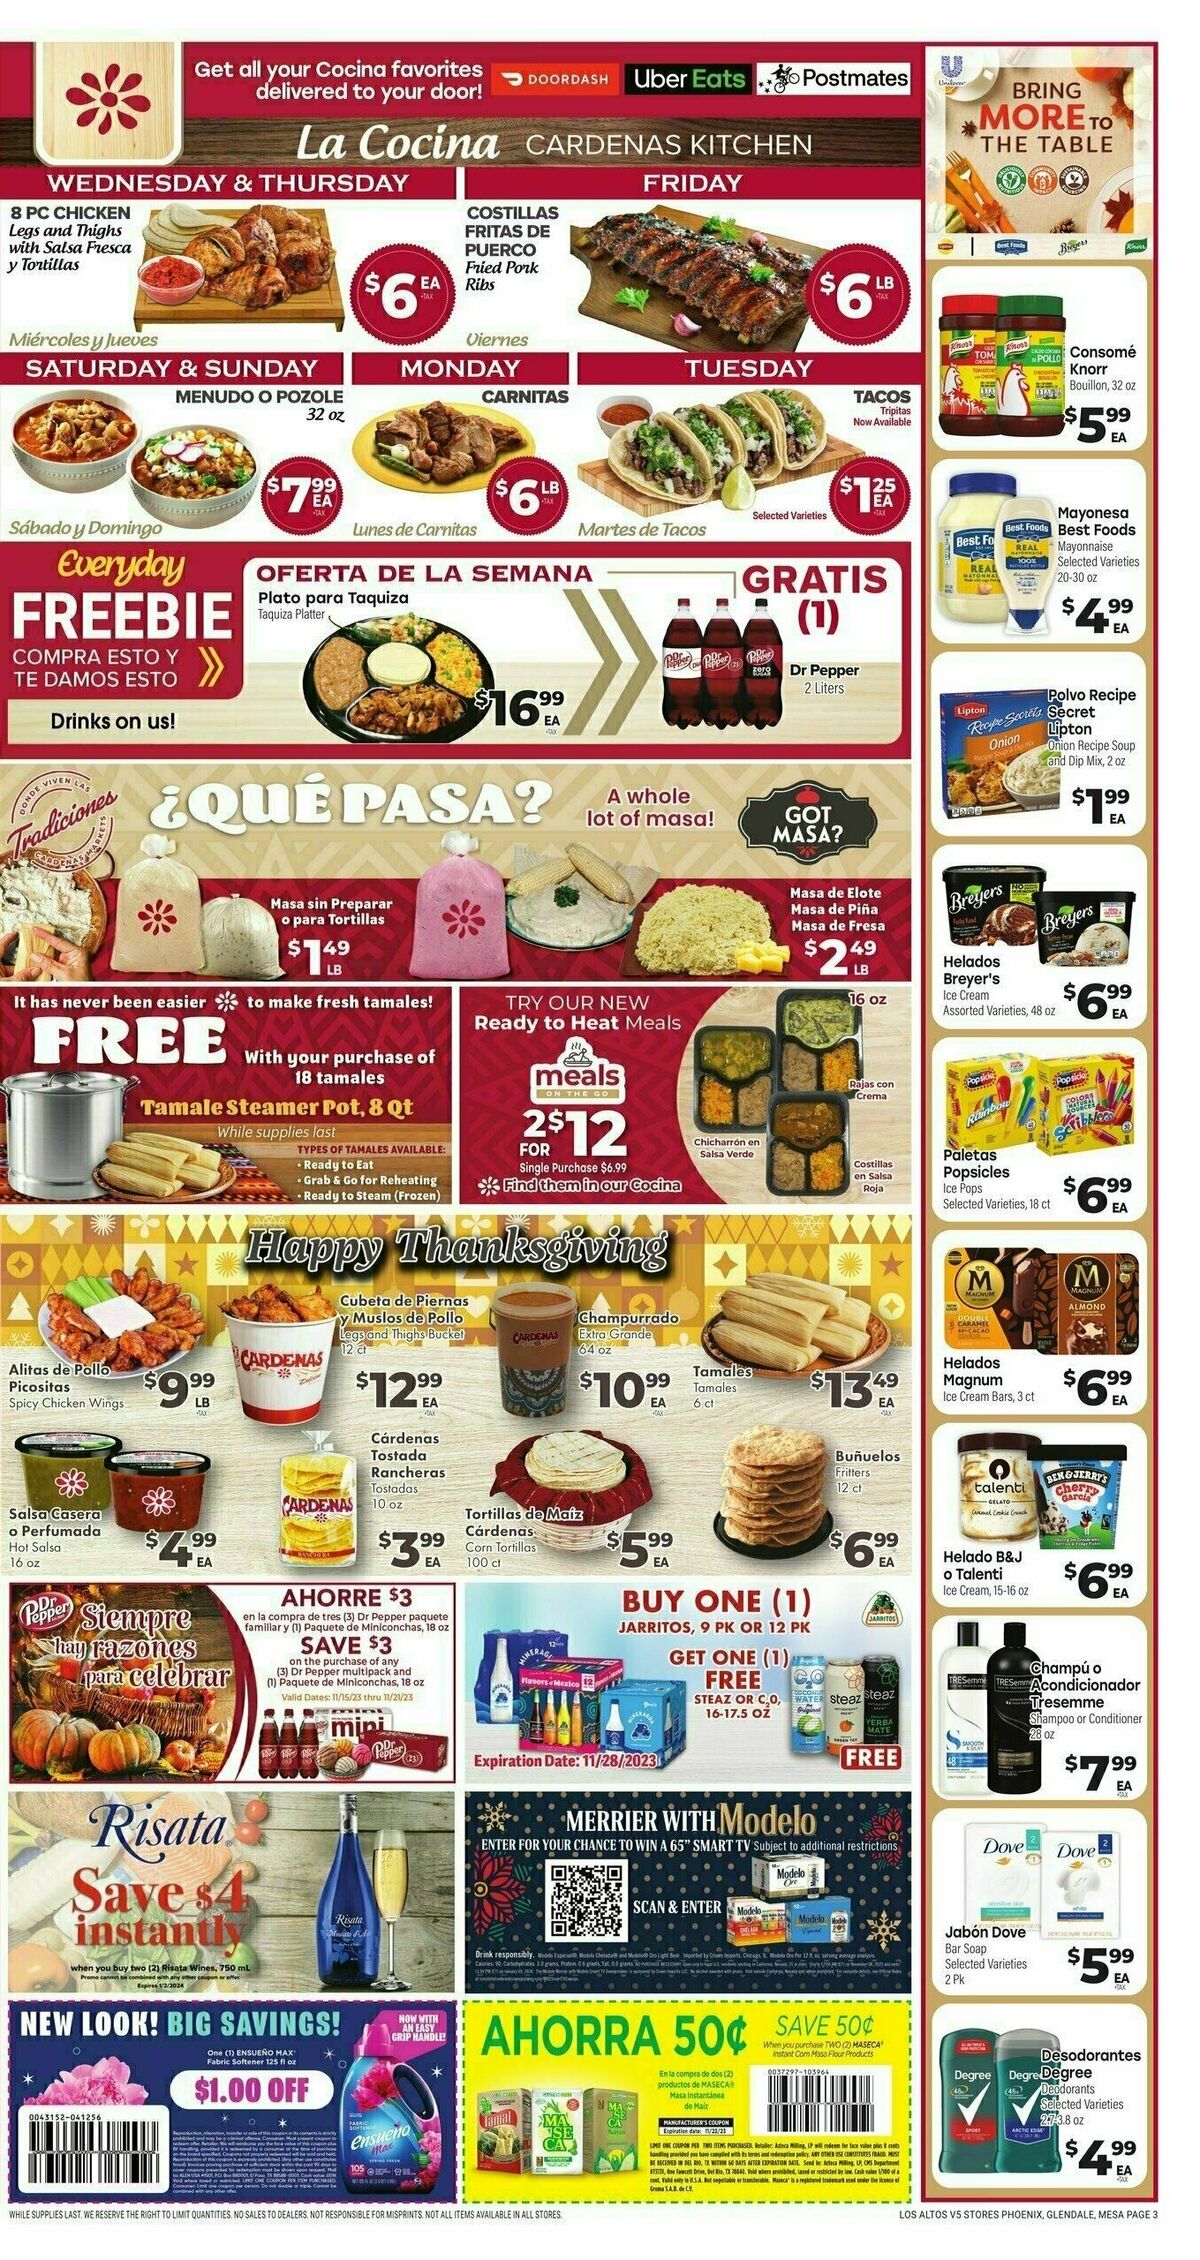 Cardenas Market Weekly Ad from November 15